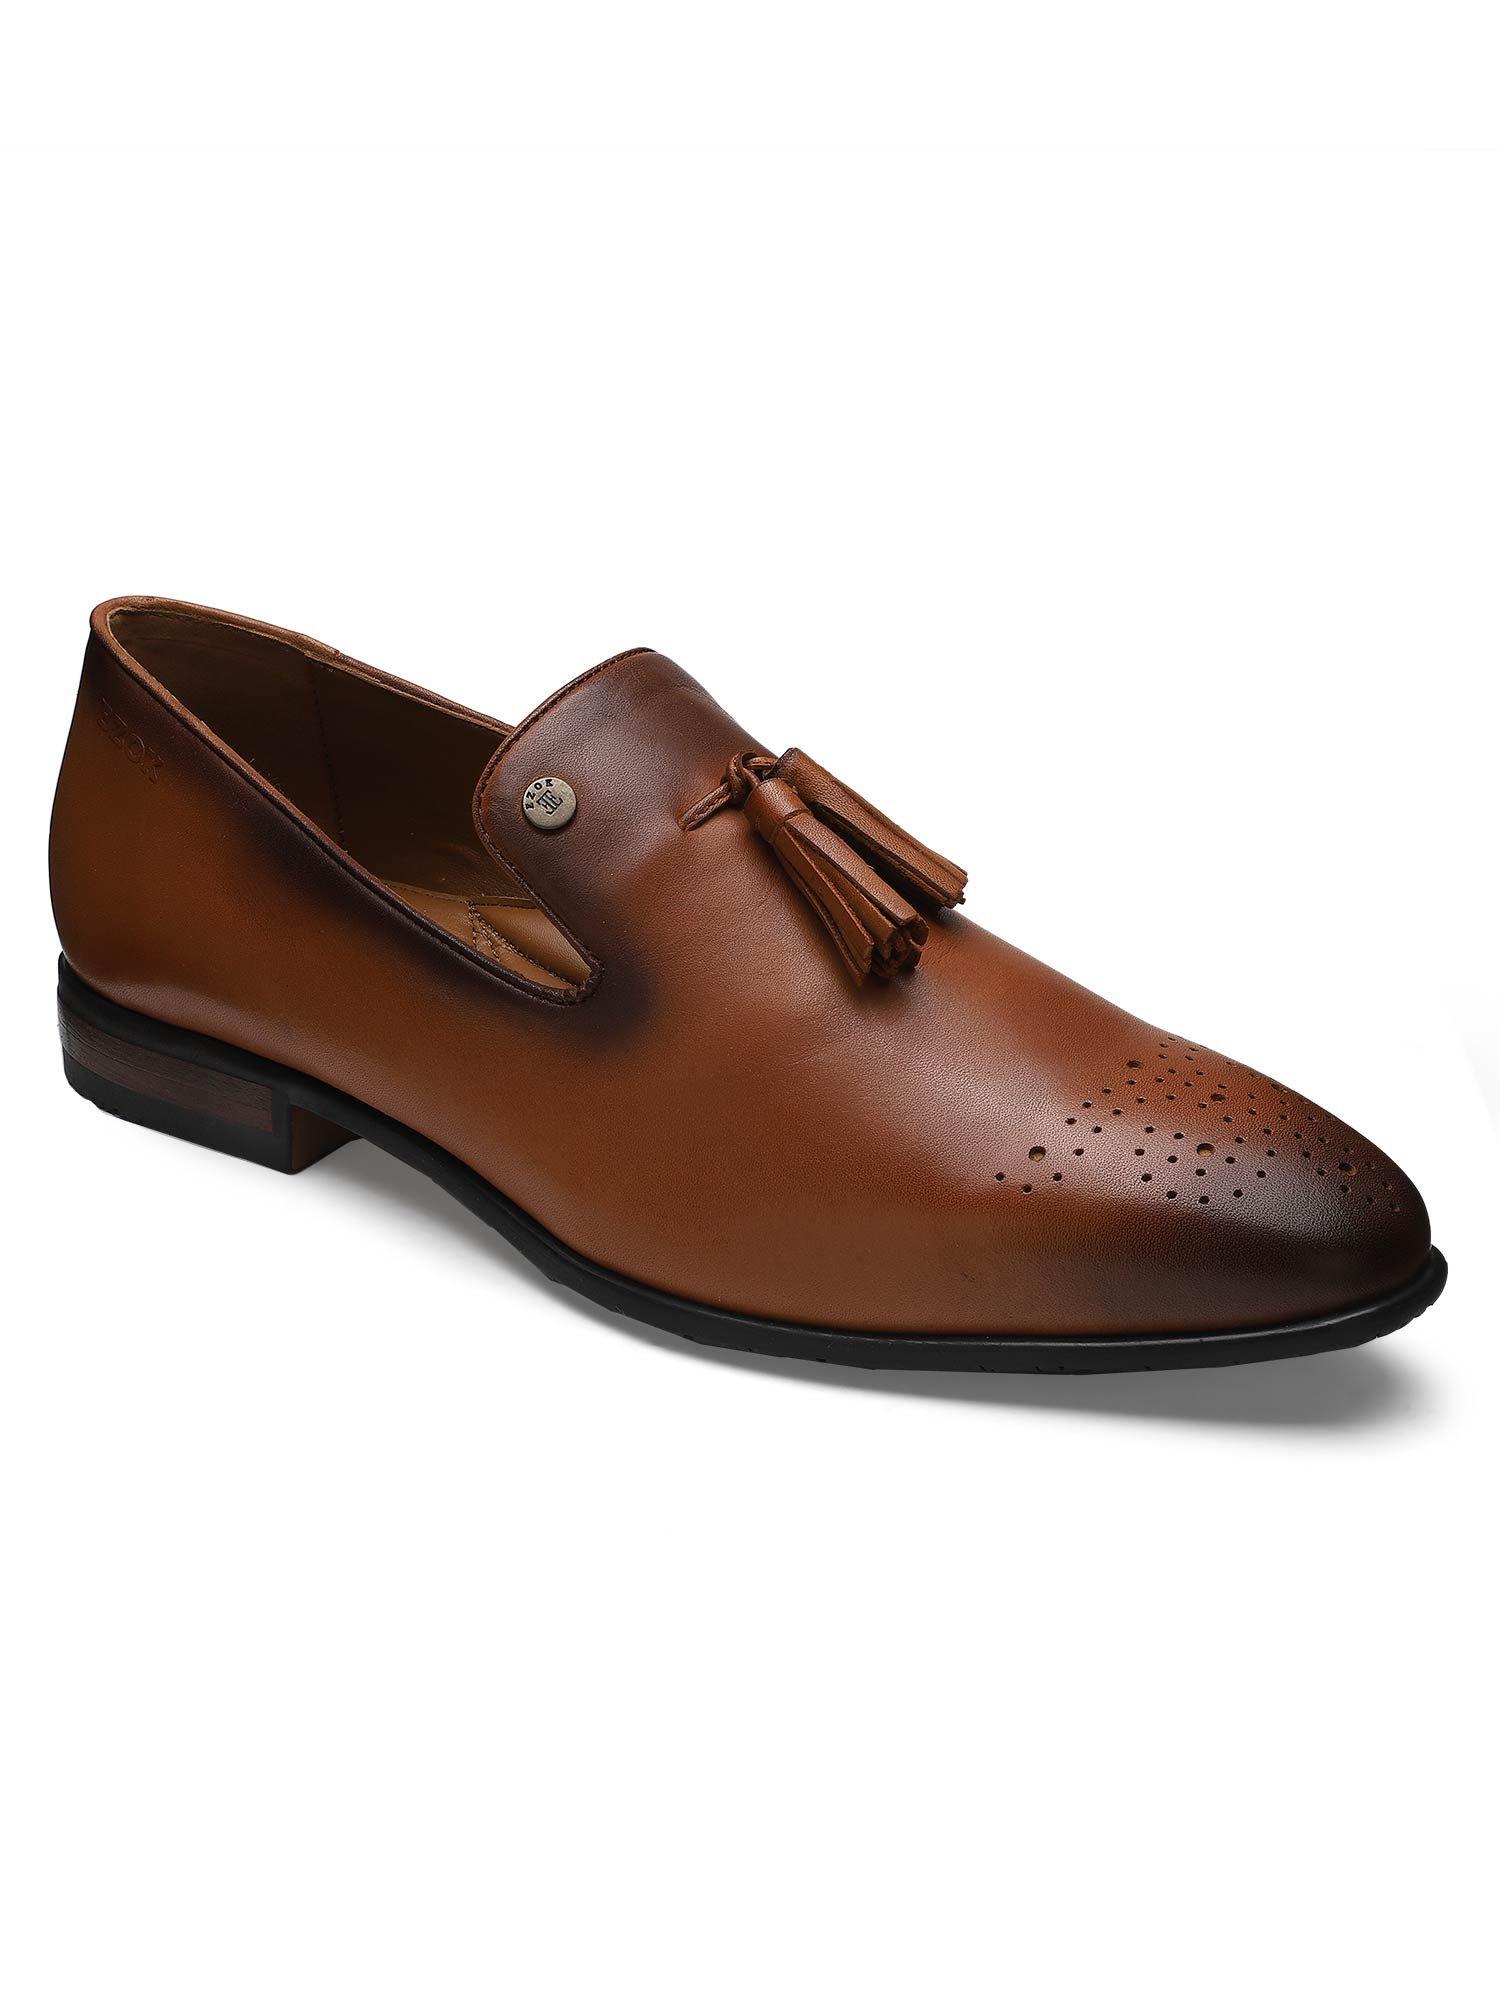 genuine leather tan solid formal slip on for men